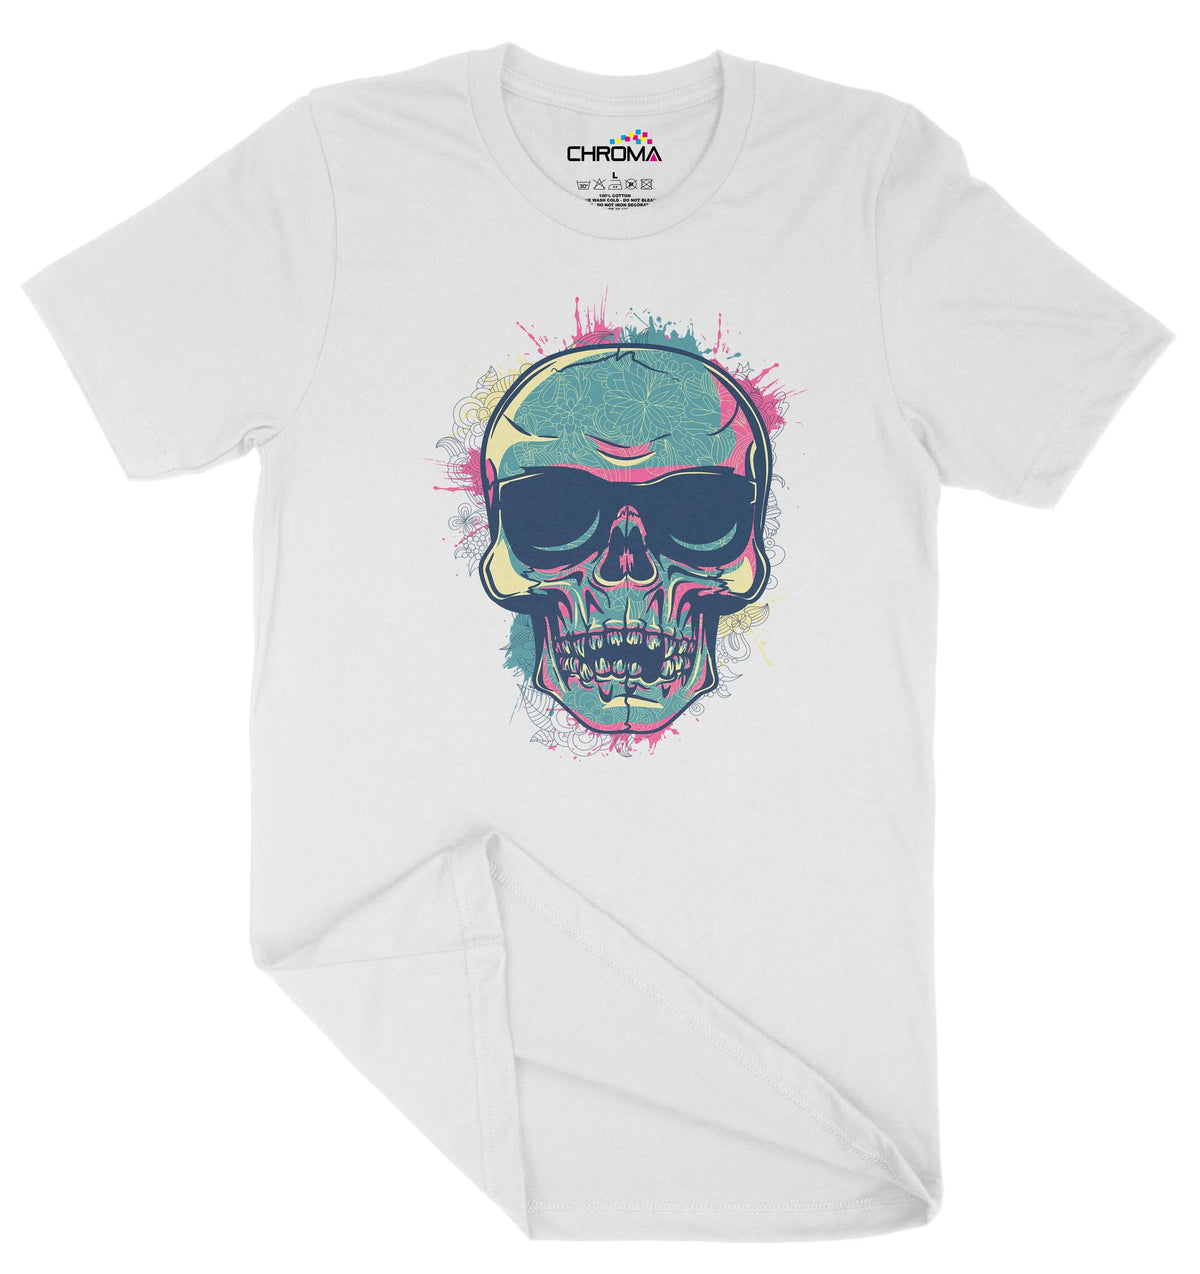 Pastel Skull Unisex Adult T-Shirt | Premium Quality Streetwear Chroma Clothing